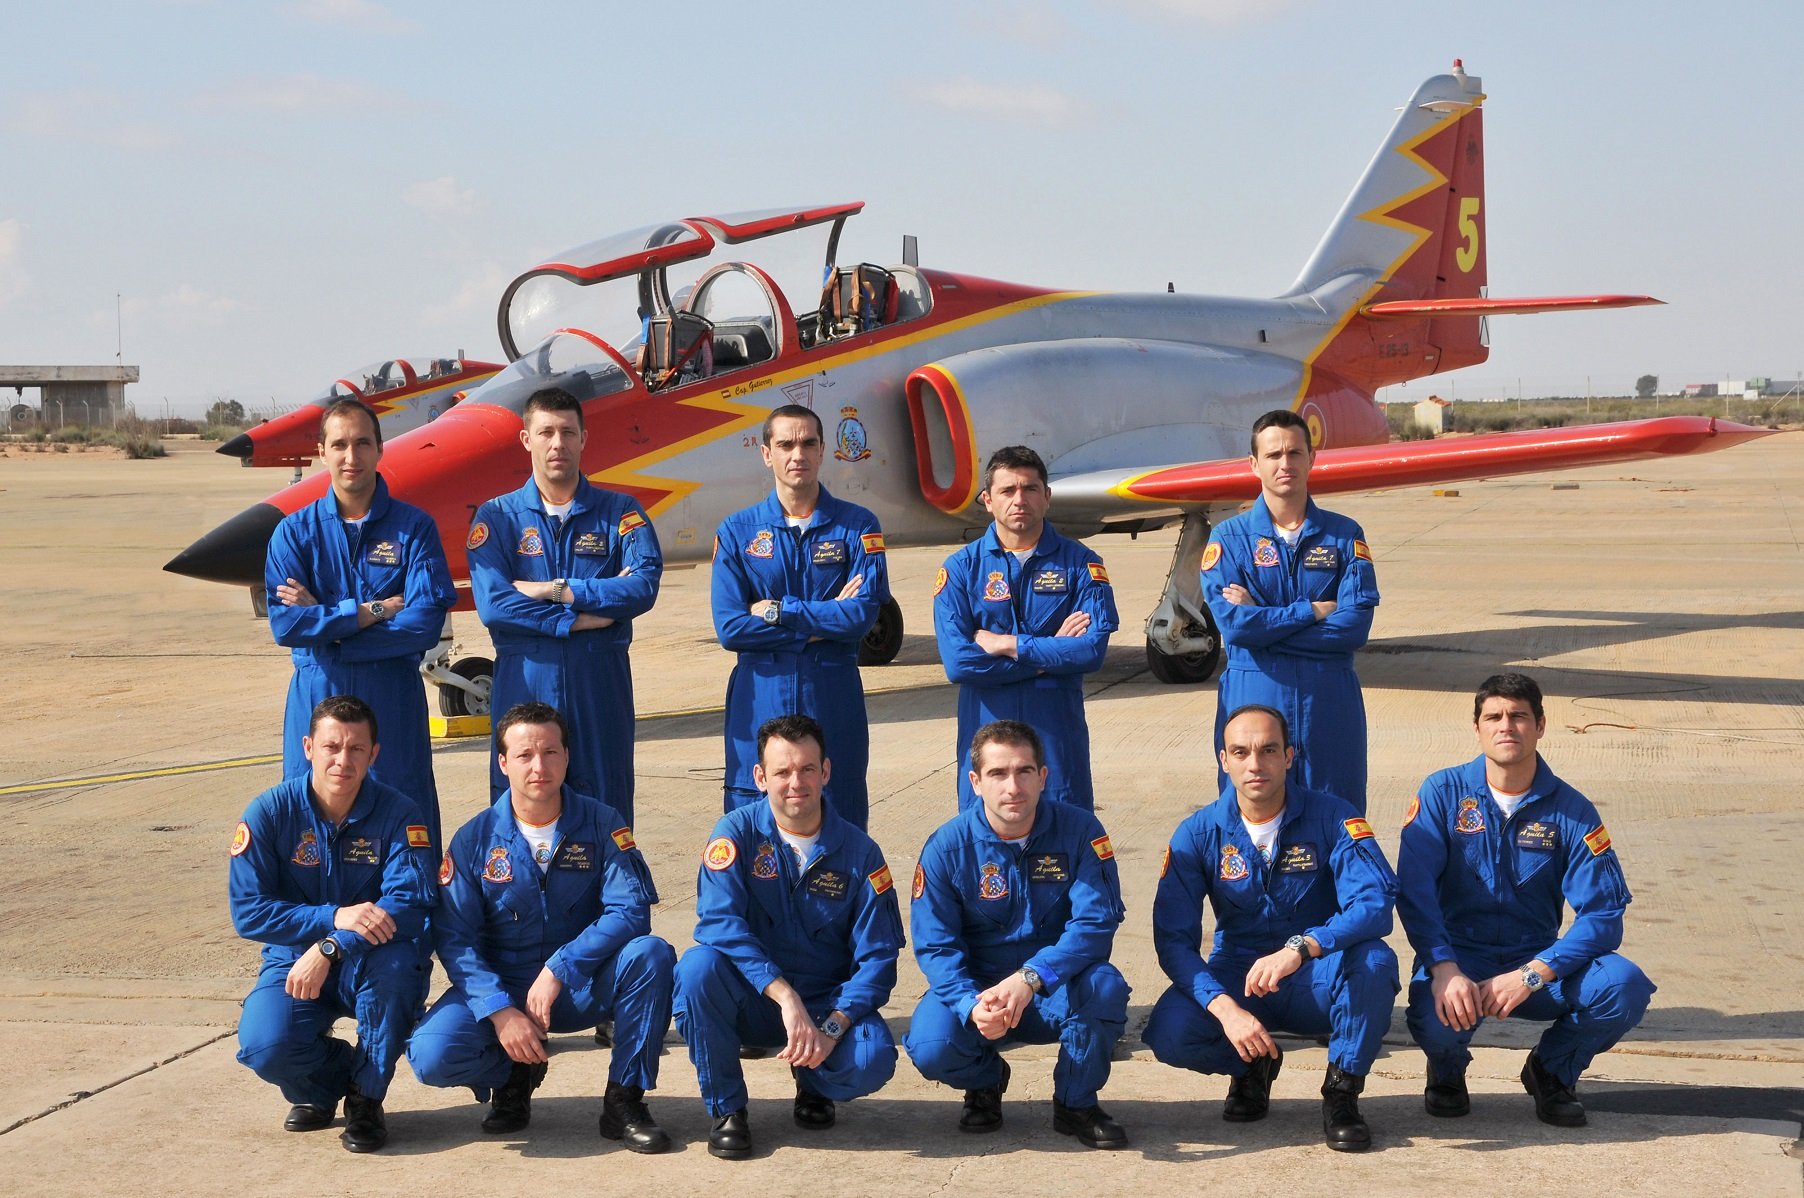 casa, C 101, Aviojet, Patrulla, Aeguila, Jet, Team, Acrobatic, Spain, Aircrafts Wallpaper